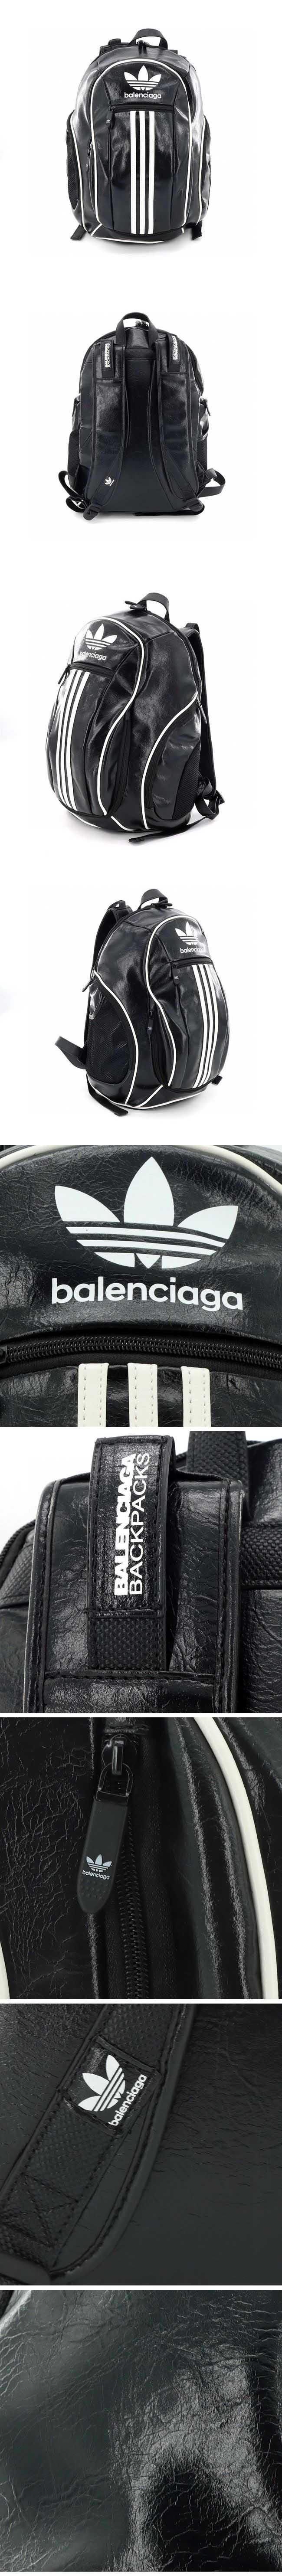 Balenciaga x Adidas Small Backpack Black/Black バレンシアガ x アディダス スモール バックパック ブラック/ブラック